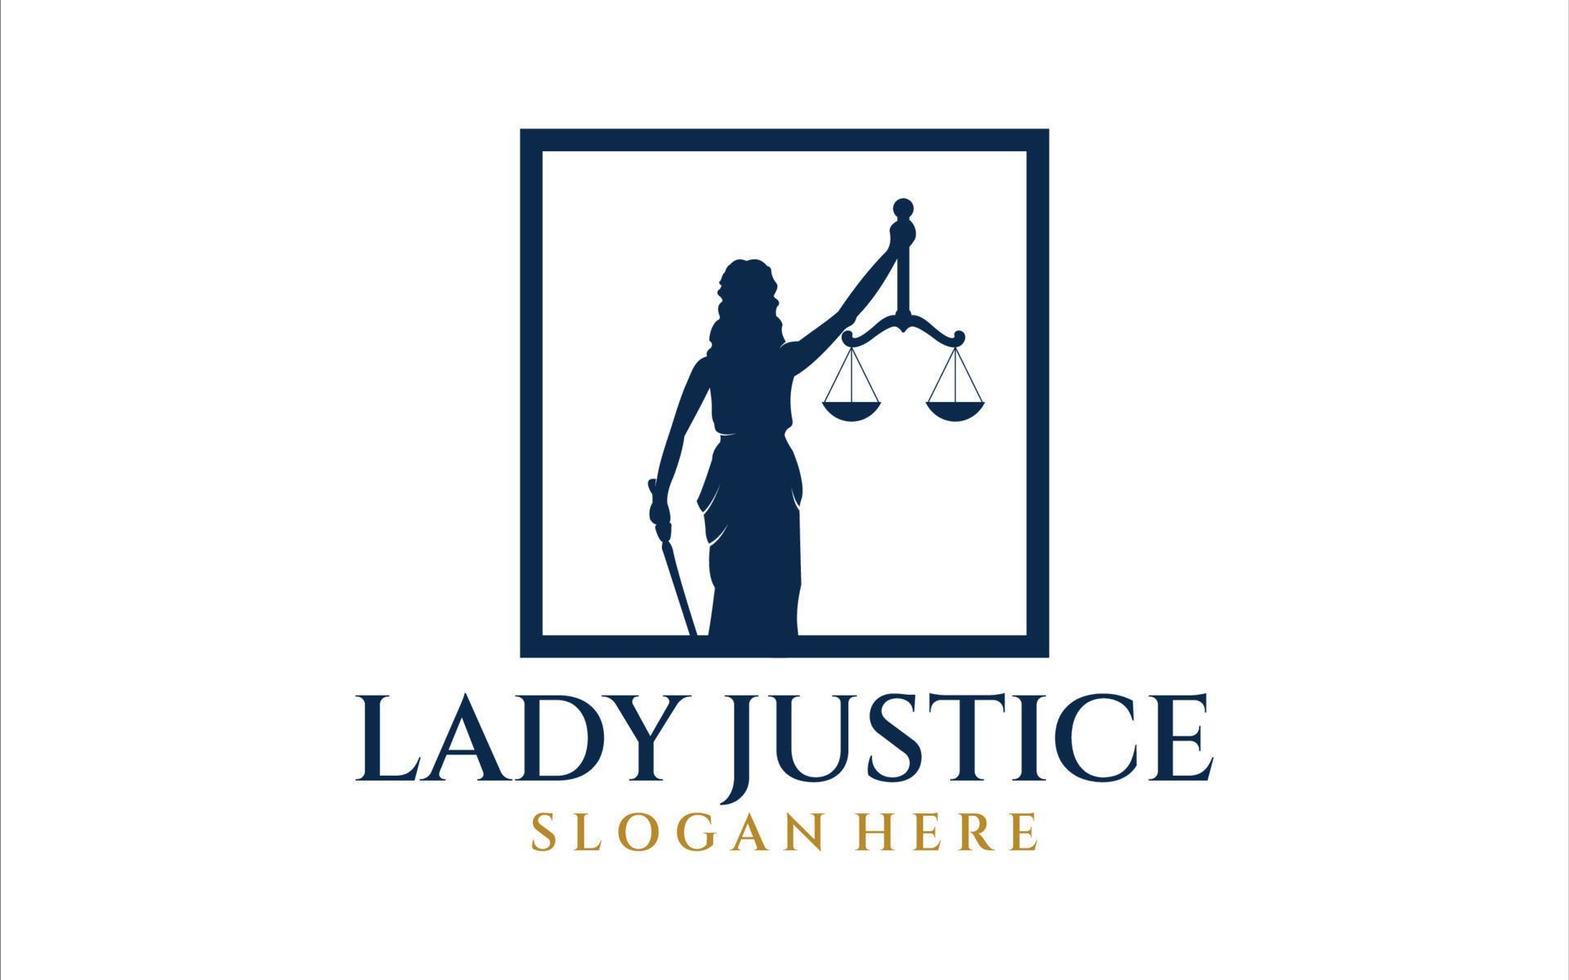 concepto de derecho de dama, abogada, diseño de justicia.logotipo o etiqueta para bufete de abogados. ilustración vectorial vector